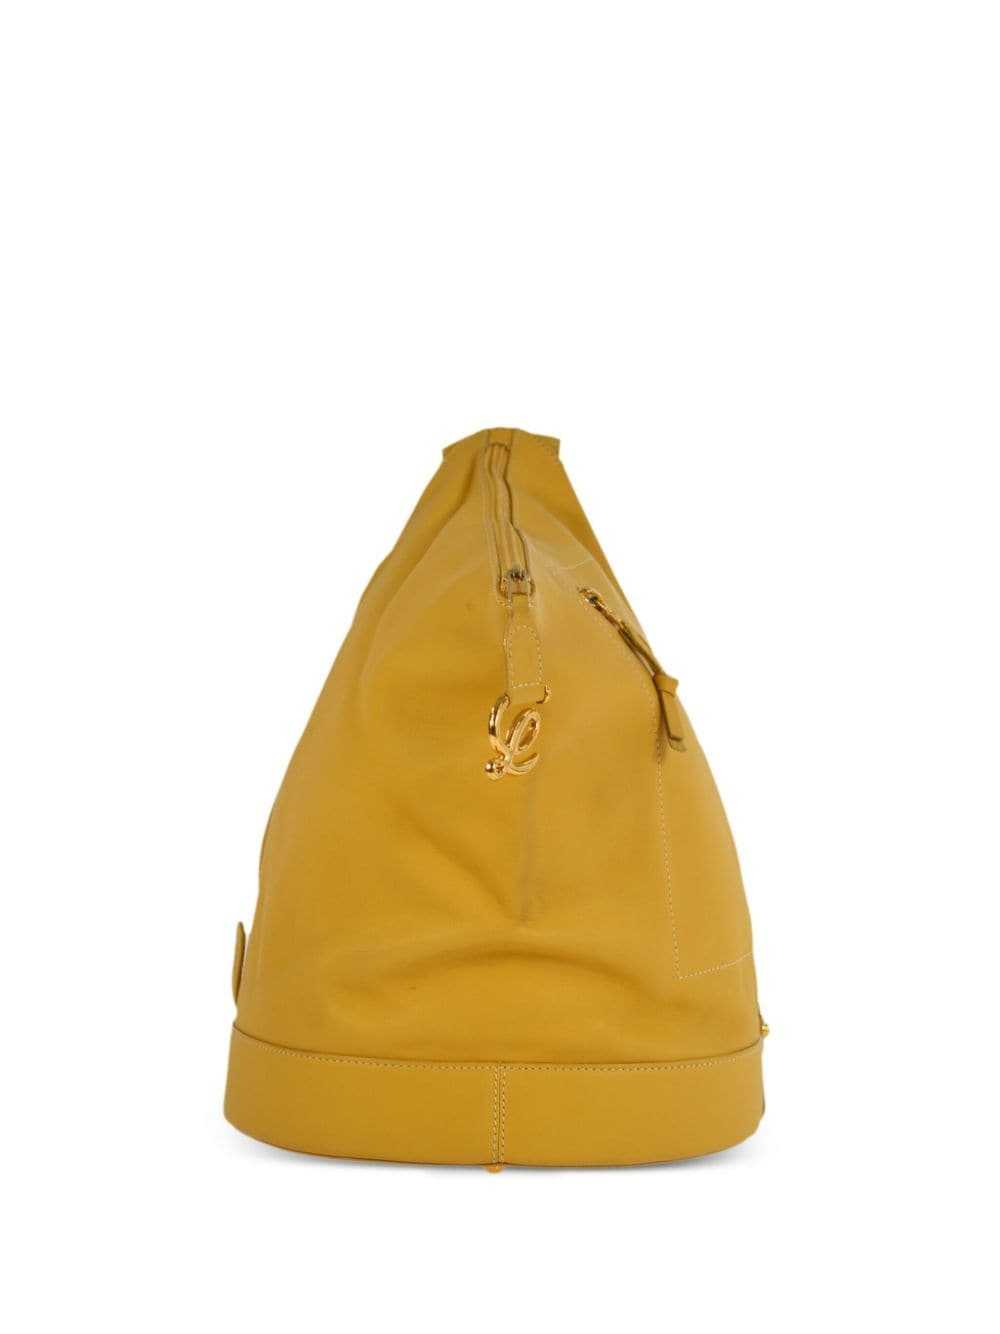 LOEWE 1990-2000s Anton leather backpack - Yellow - Gem